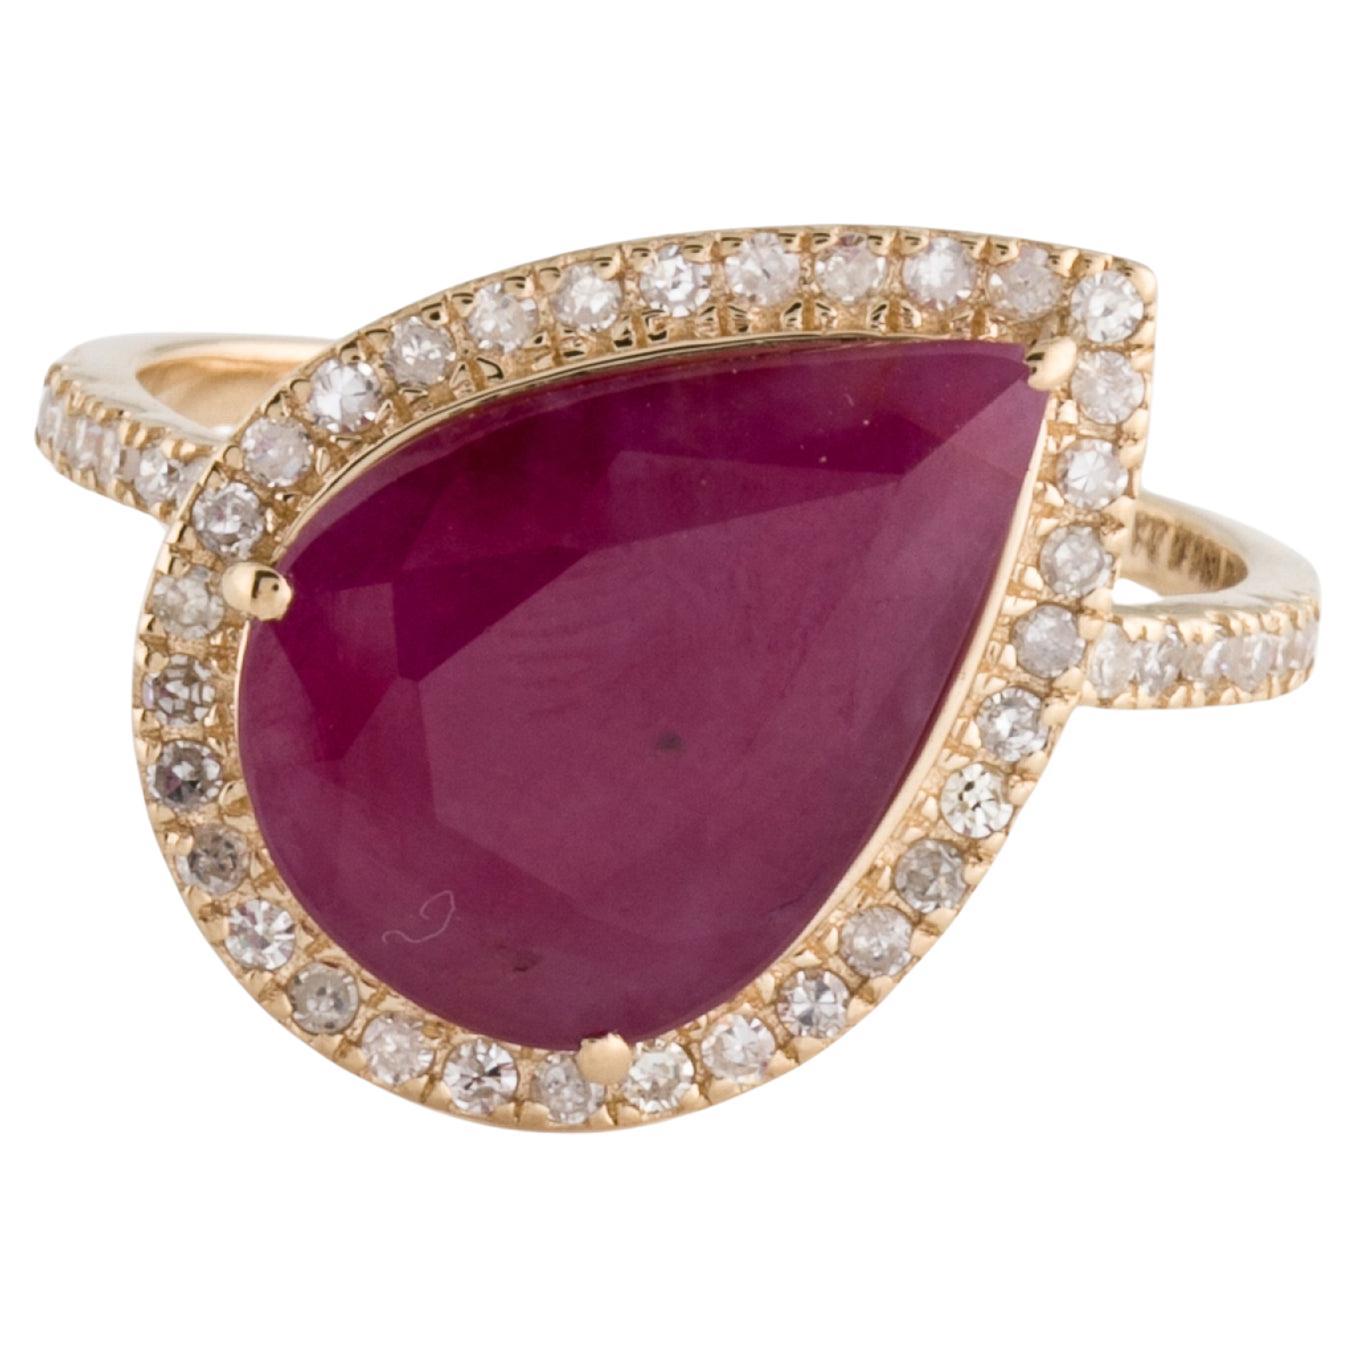 Luxurious 14K Ruby & Diamond Cocktail Ring 5.17ctw - Size 8 - Statement Jewelry